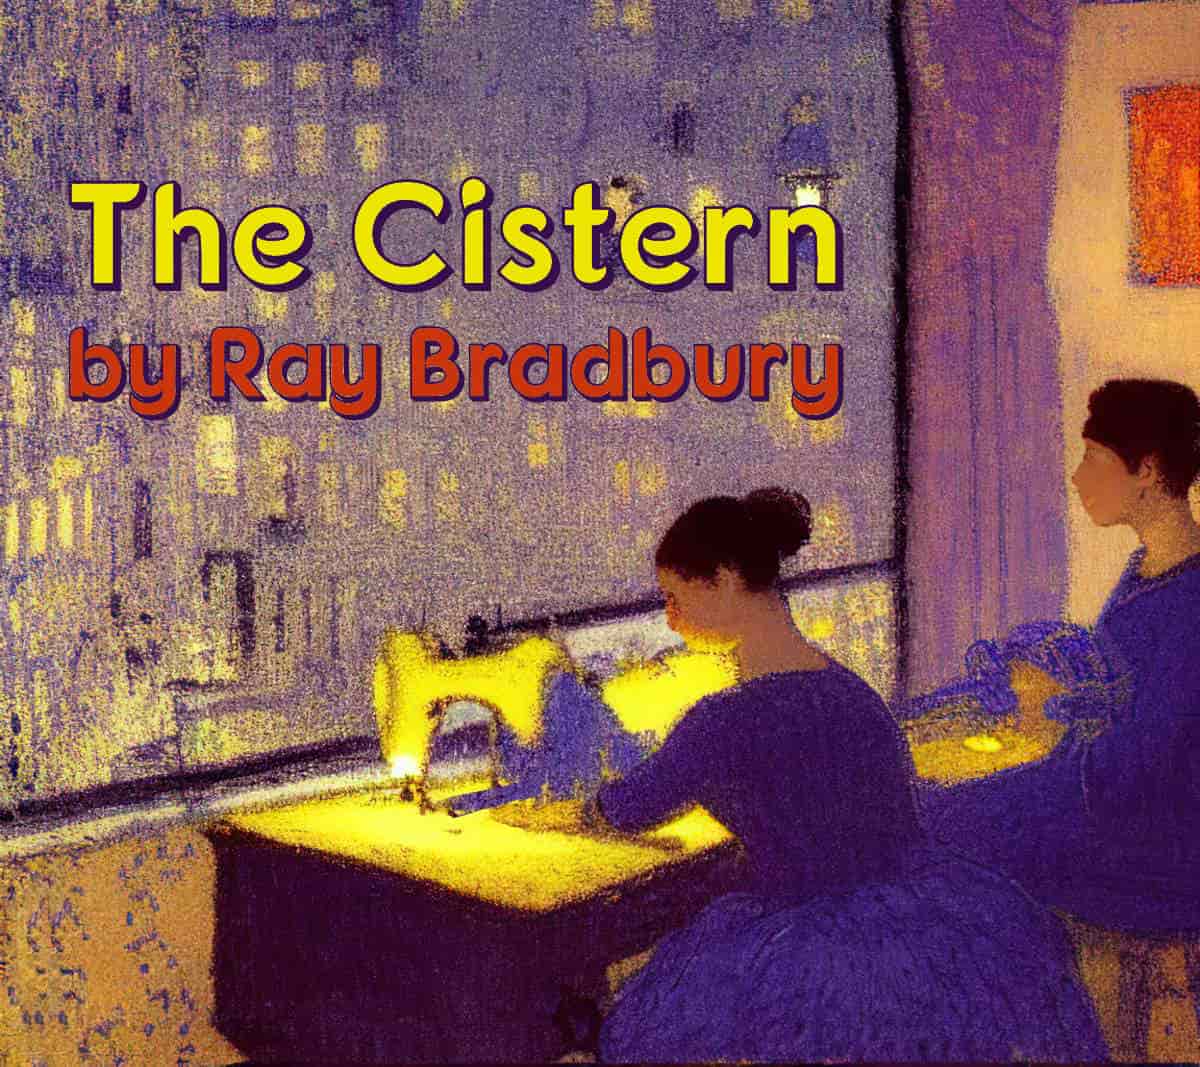 The Cistern by Ray Bradbury Short Story Analysis